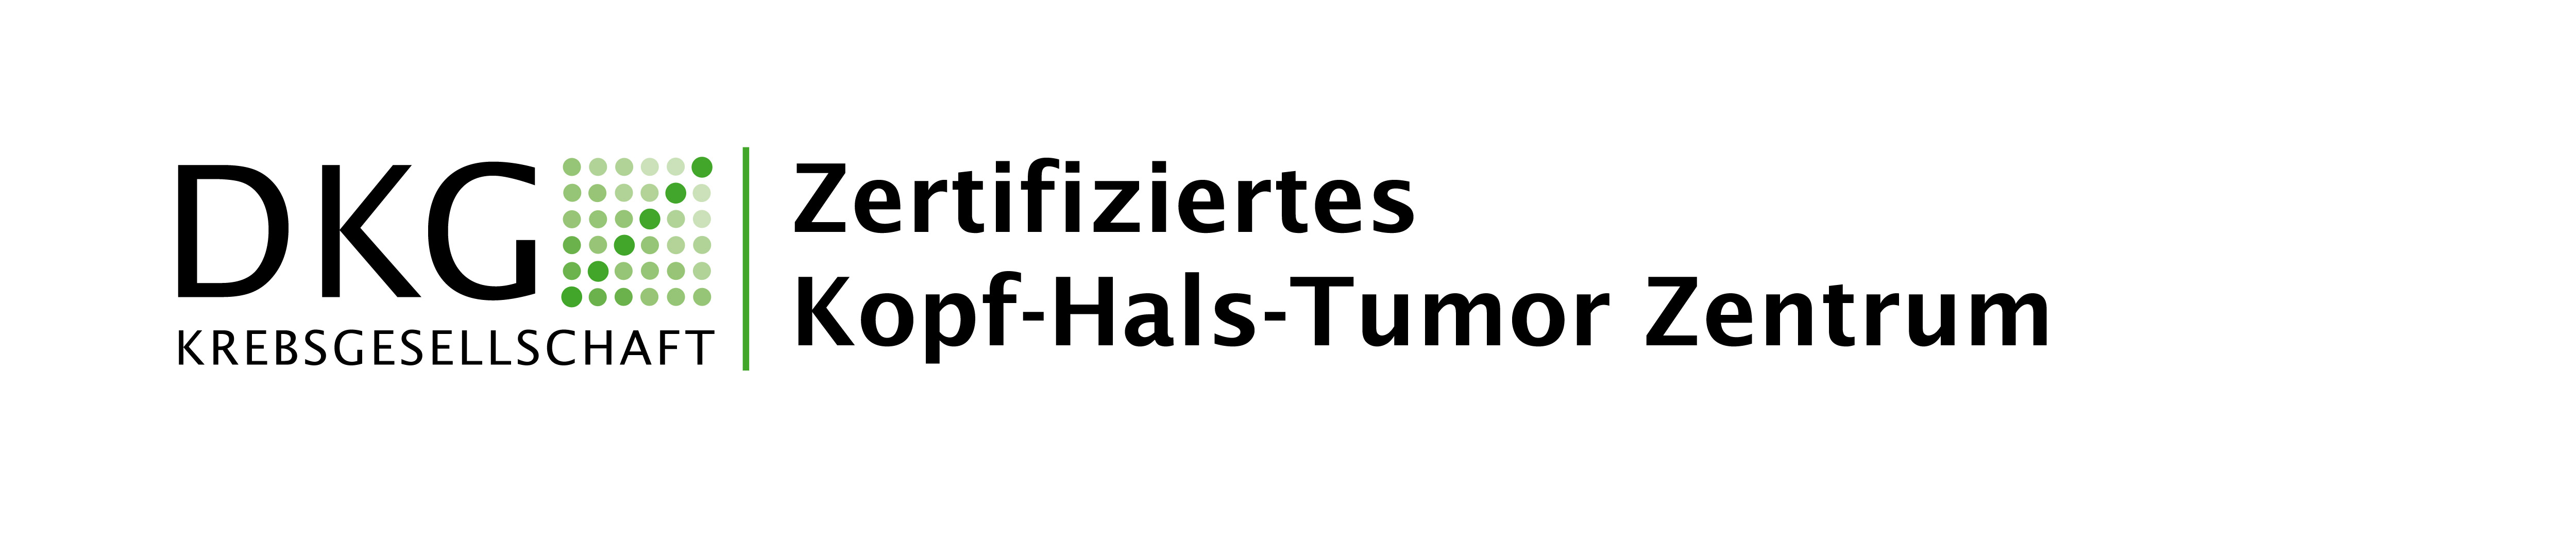 Zertifiziertes Kopf-Hals-Tumorzentrums